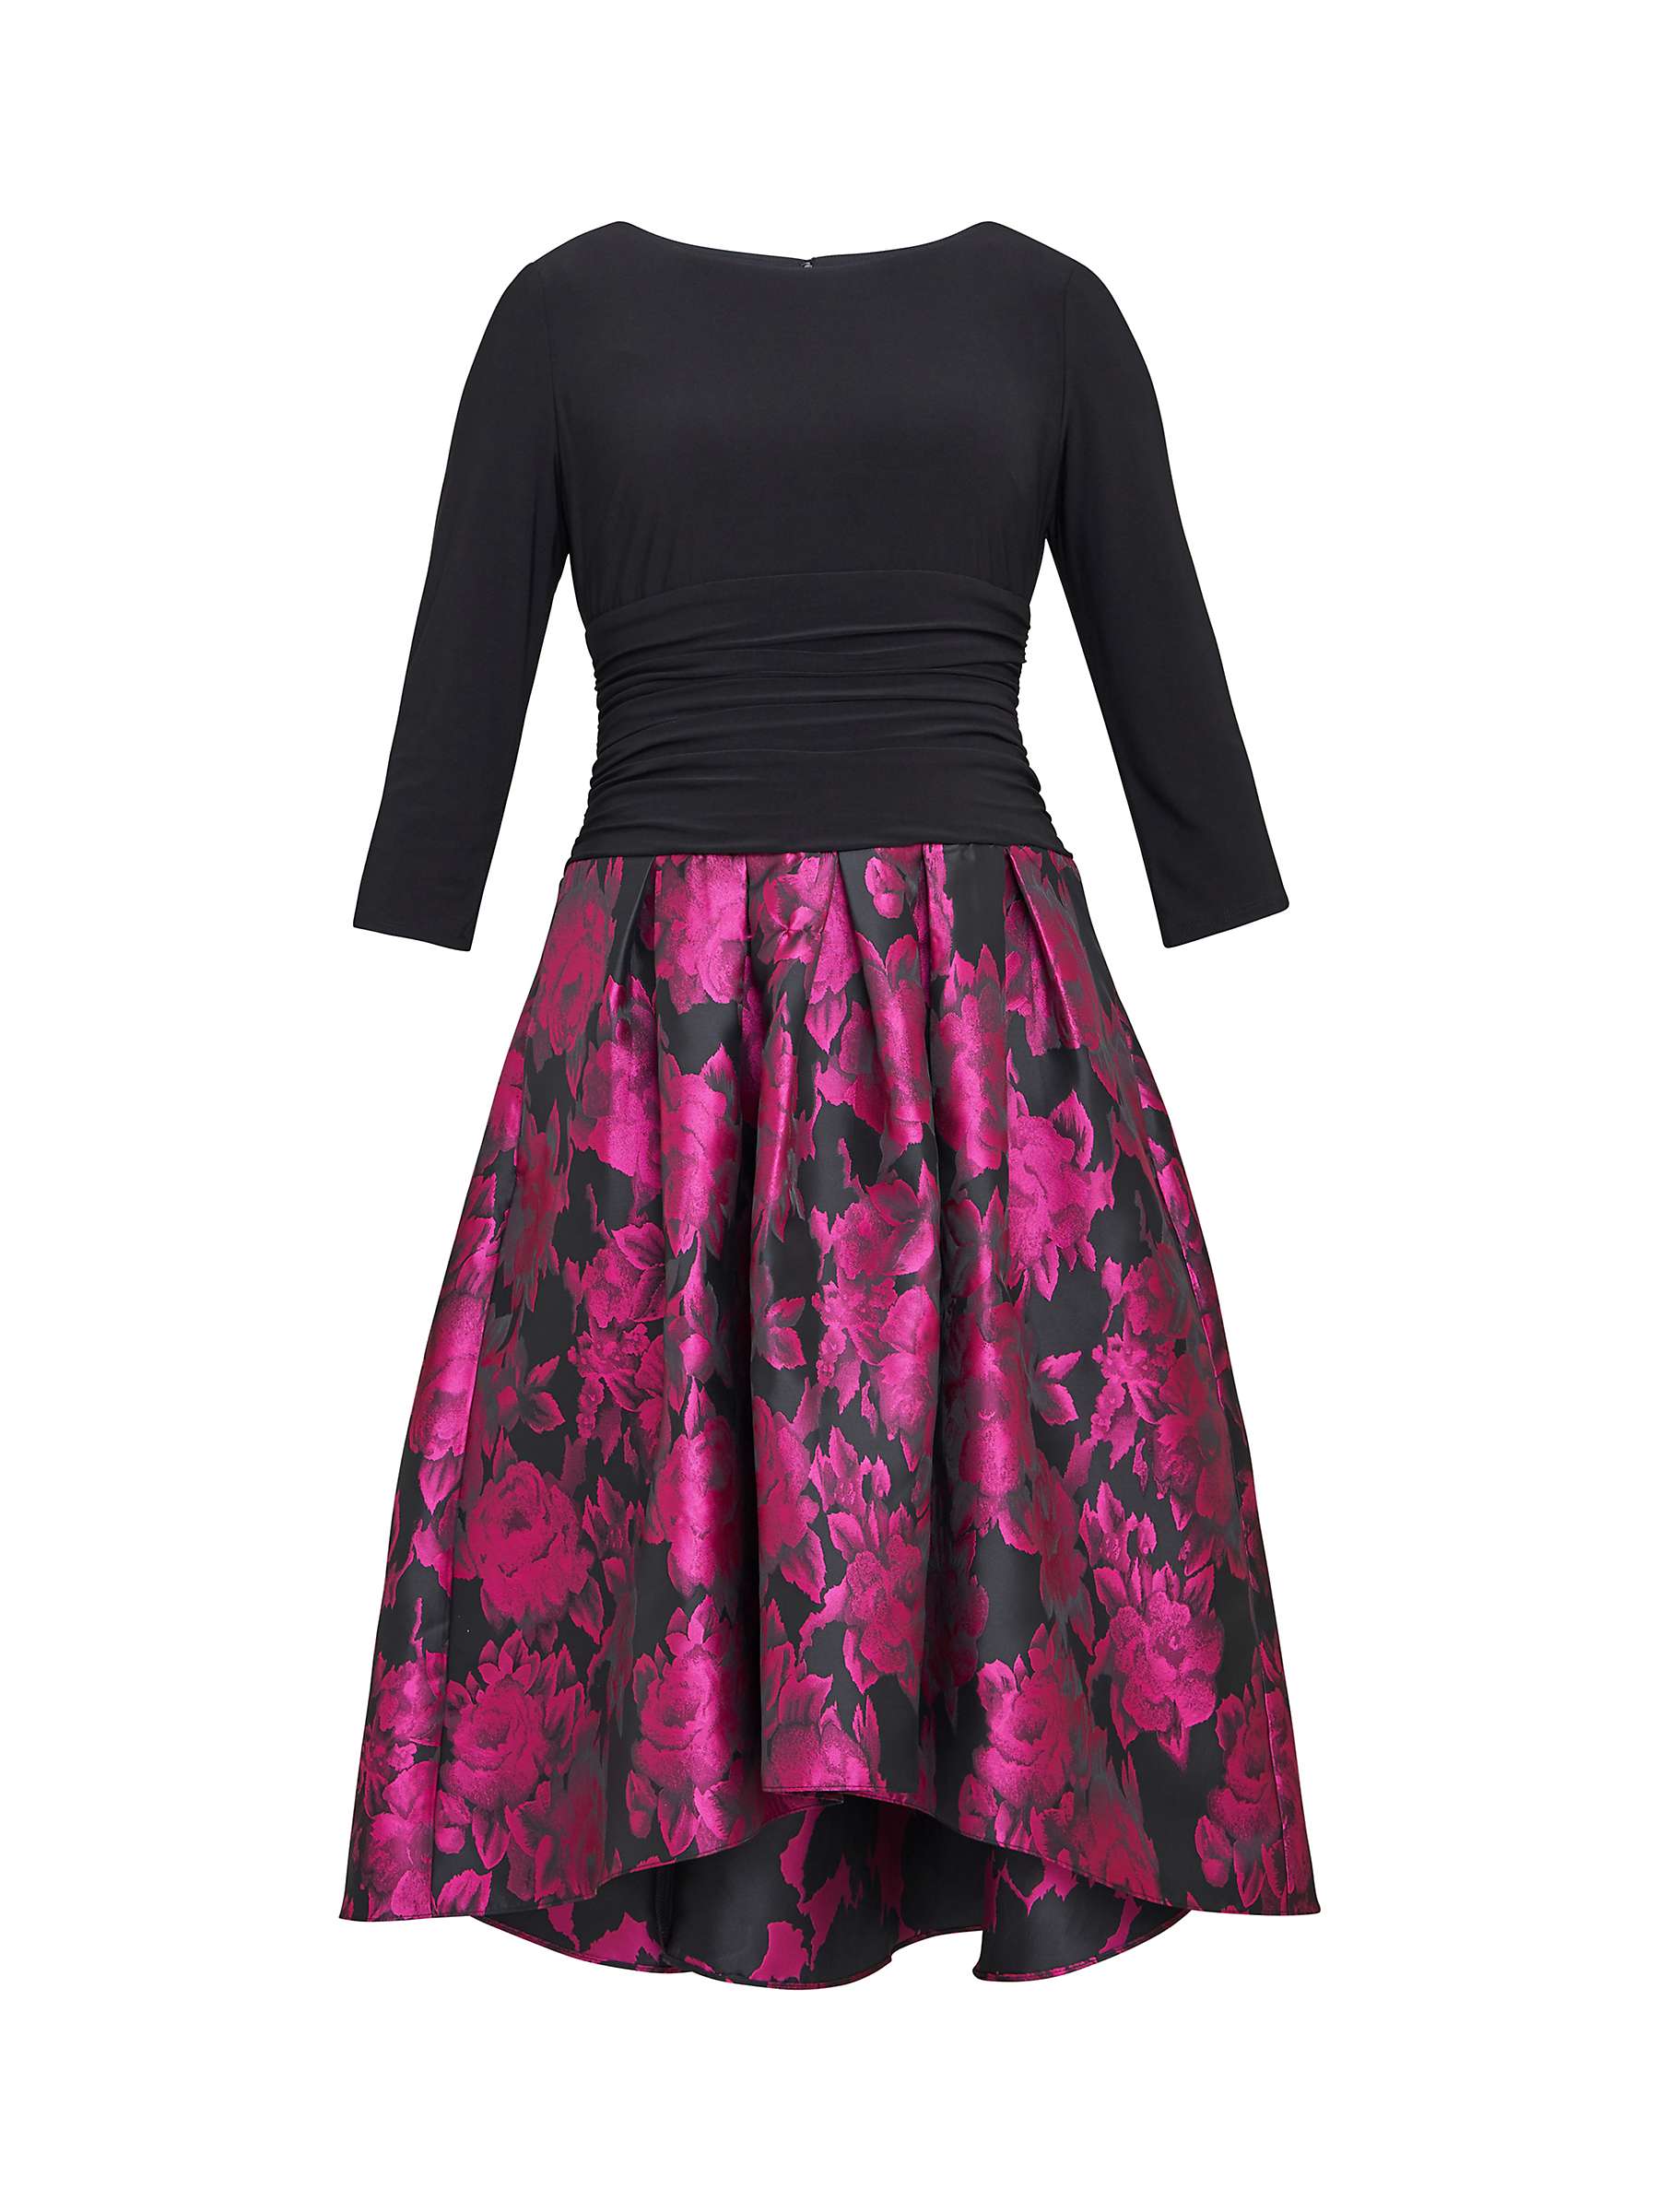 Buy Gina Bacconi Hannah Jacquard Dress, Black/Red Online at johnlewis.com